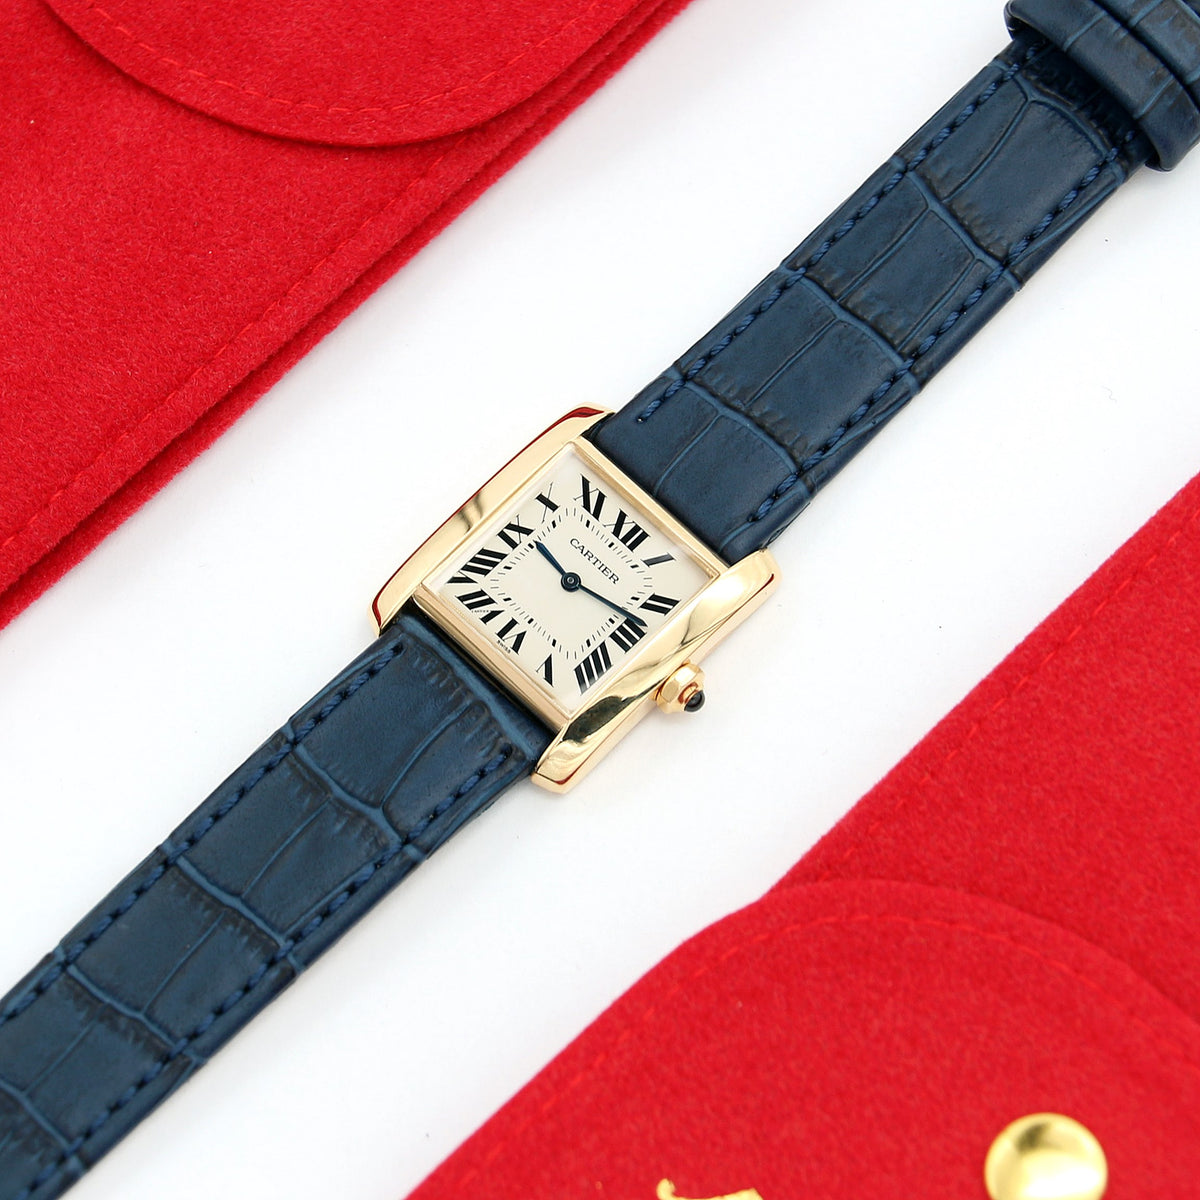 Cartier Tank Francaise Midsize 18K Yellow Gold Quartz Watch Ref 1821